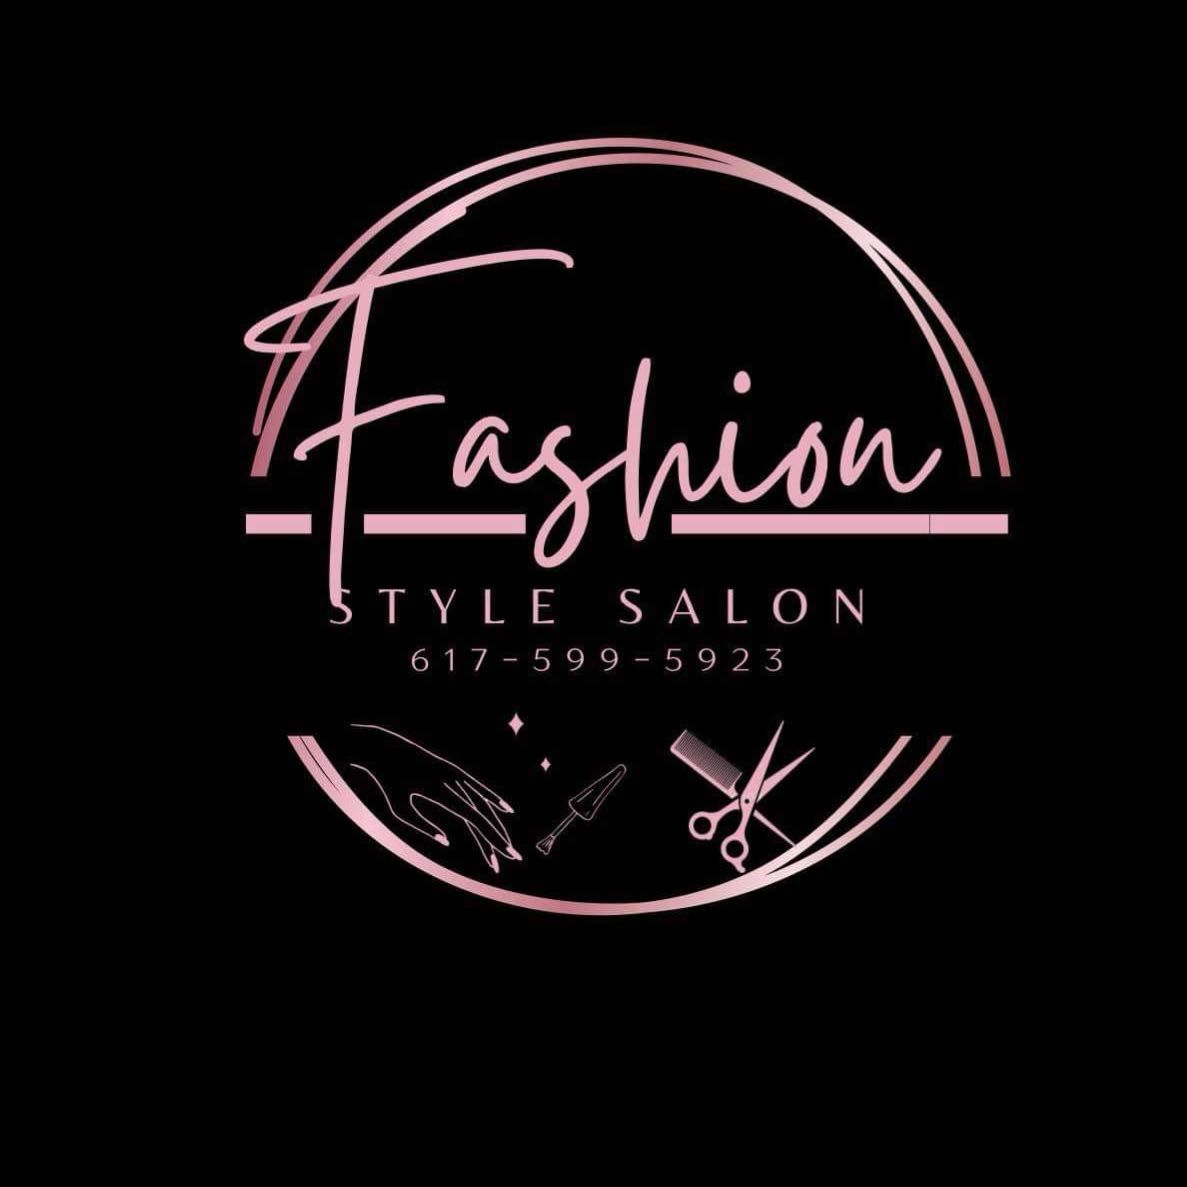 Fashion style salon, 1 Forbes St, Jamaica Plain, Jamaica Plain 02130